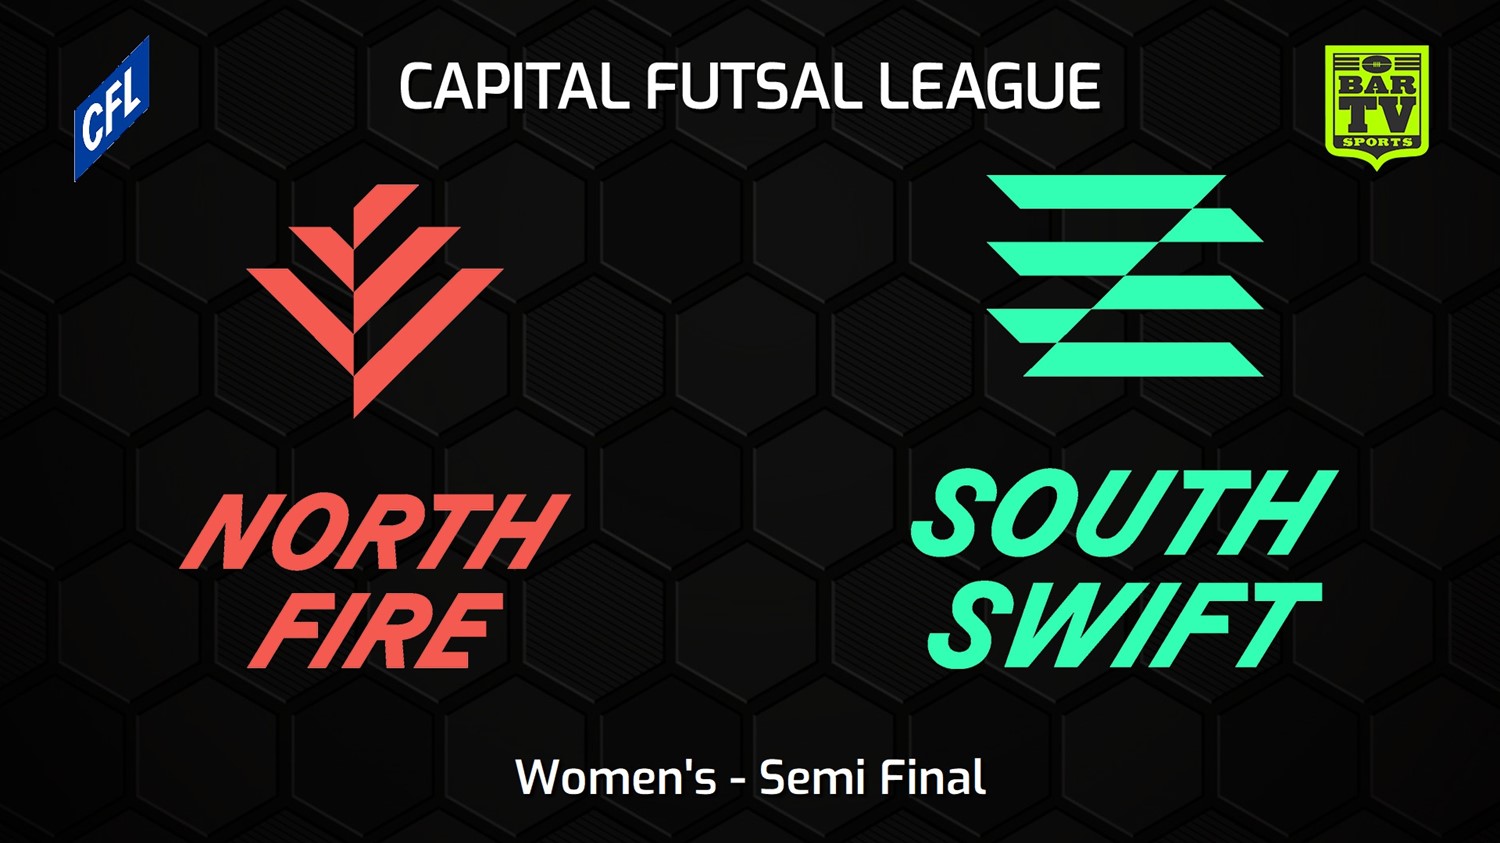 240204-Capital Football Futsal Semi Final - Women's - North Canberra Fire v South Canberra Swift Minigame Slate Image